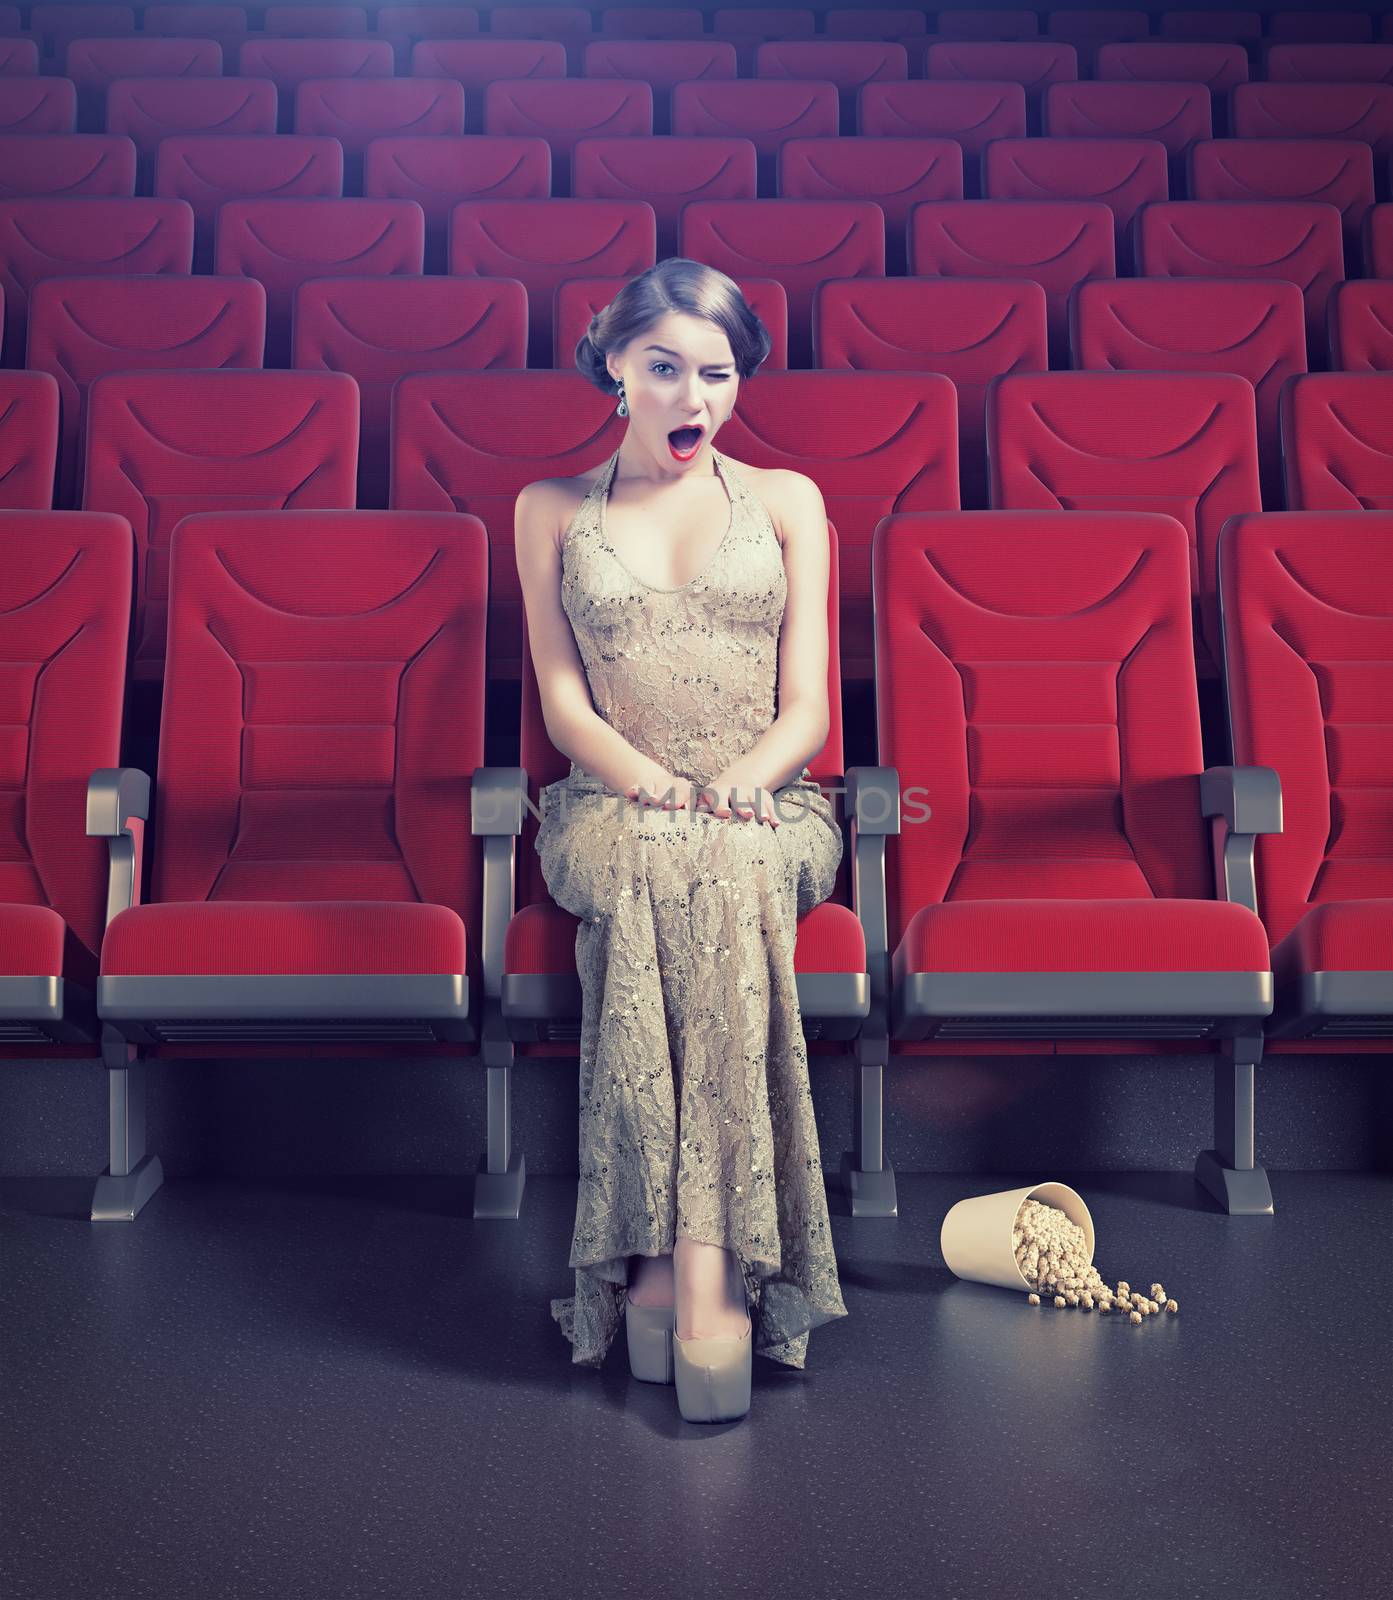 girl in an empty cinema by vicnt